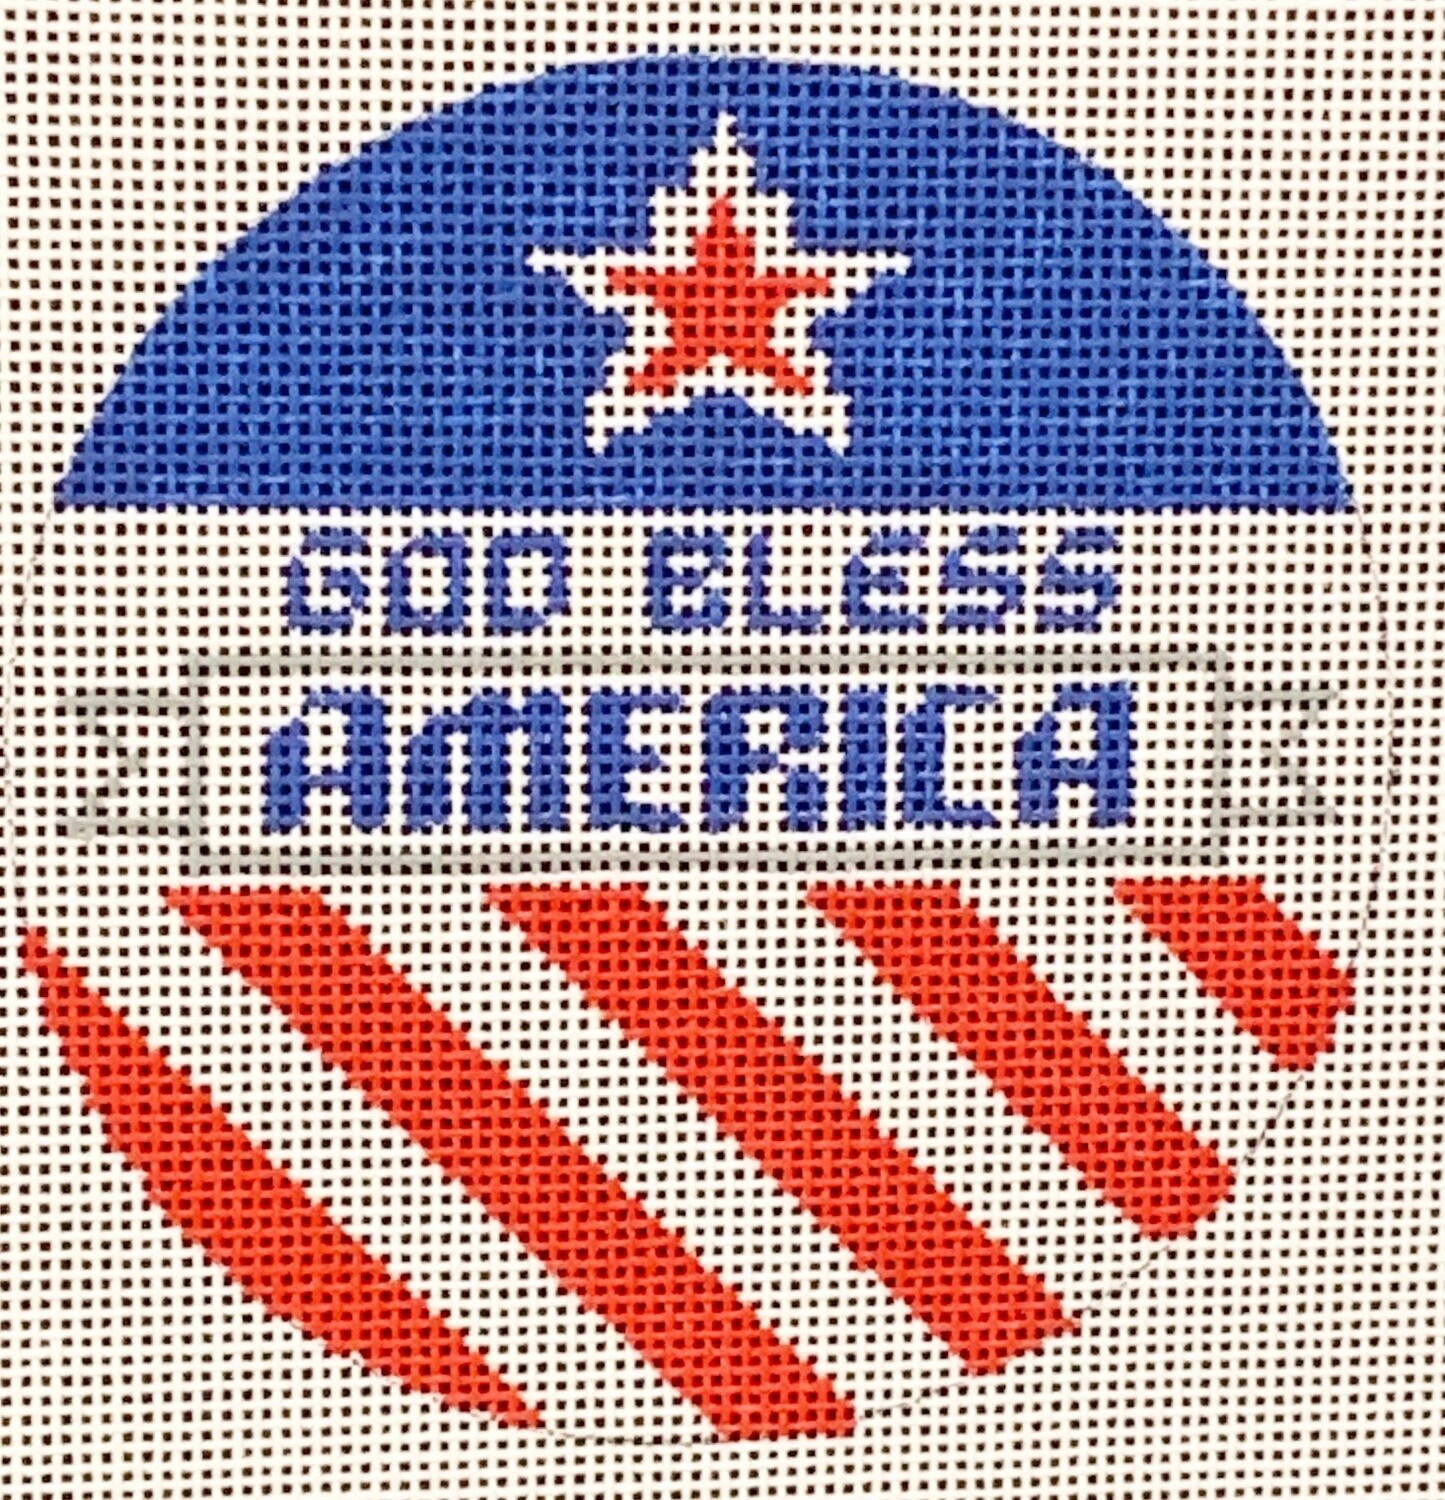 God Bless America Ornament